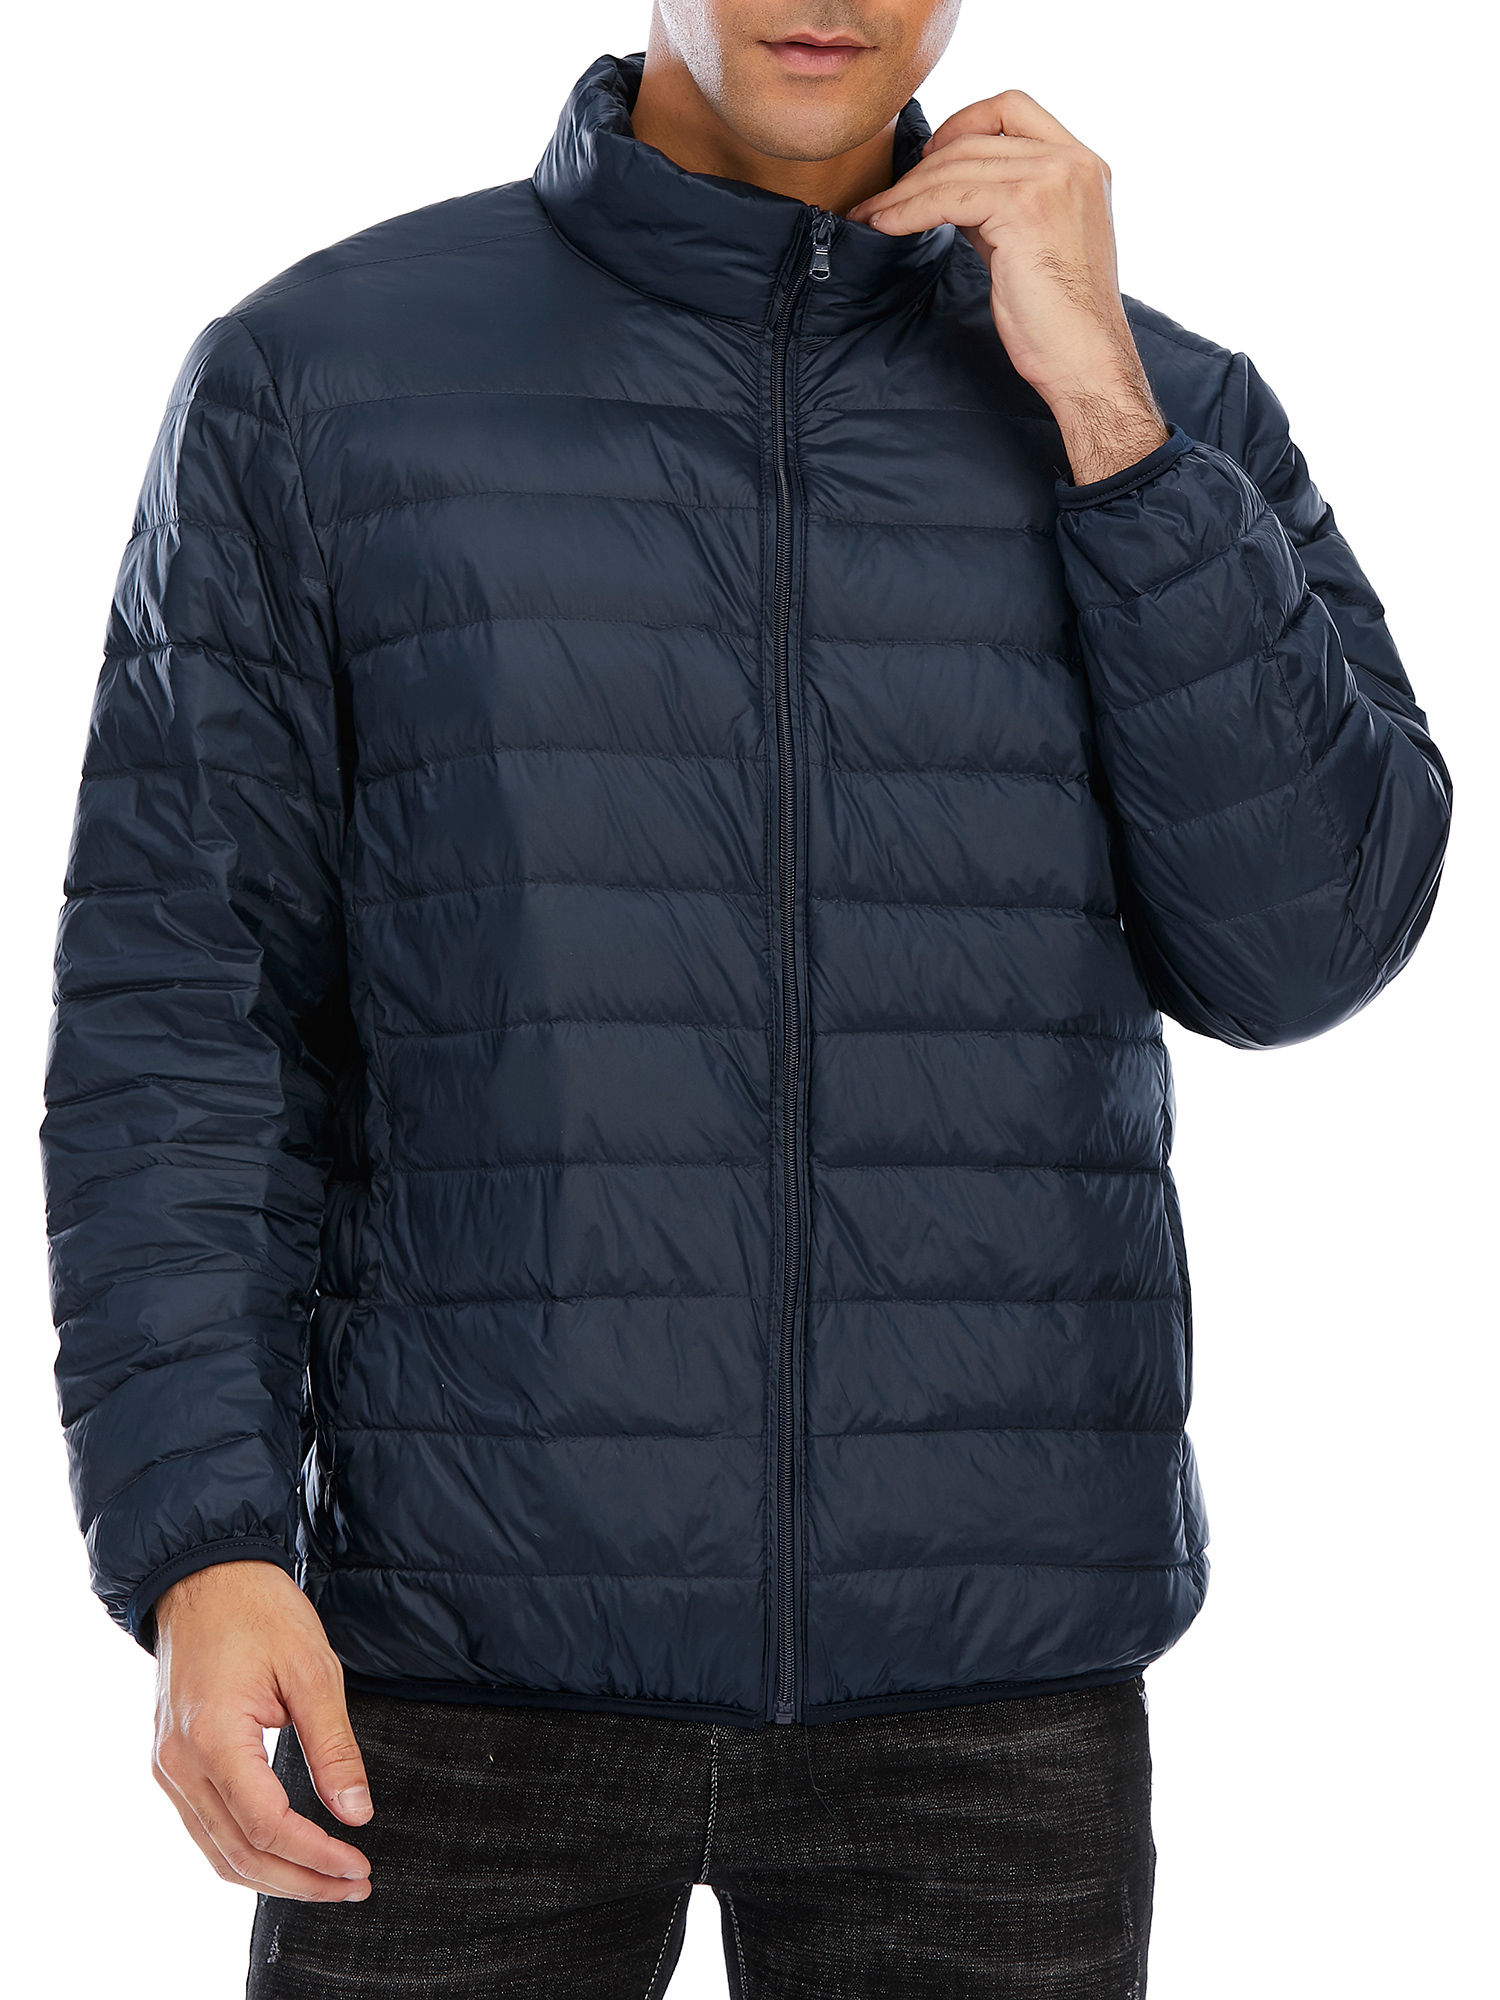 Mens Down Jacket Casual Zip Up Windbreaker Jackets Outdoor Coat Winter Jackets Lightweight Down Jacket Men Boys Puffer Coats Outwear, Size S-2XL - image 1 of 7